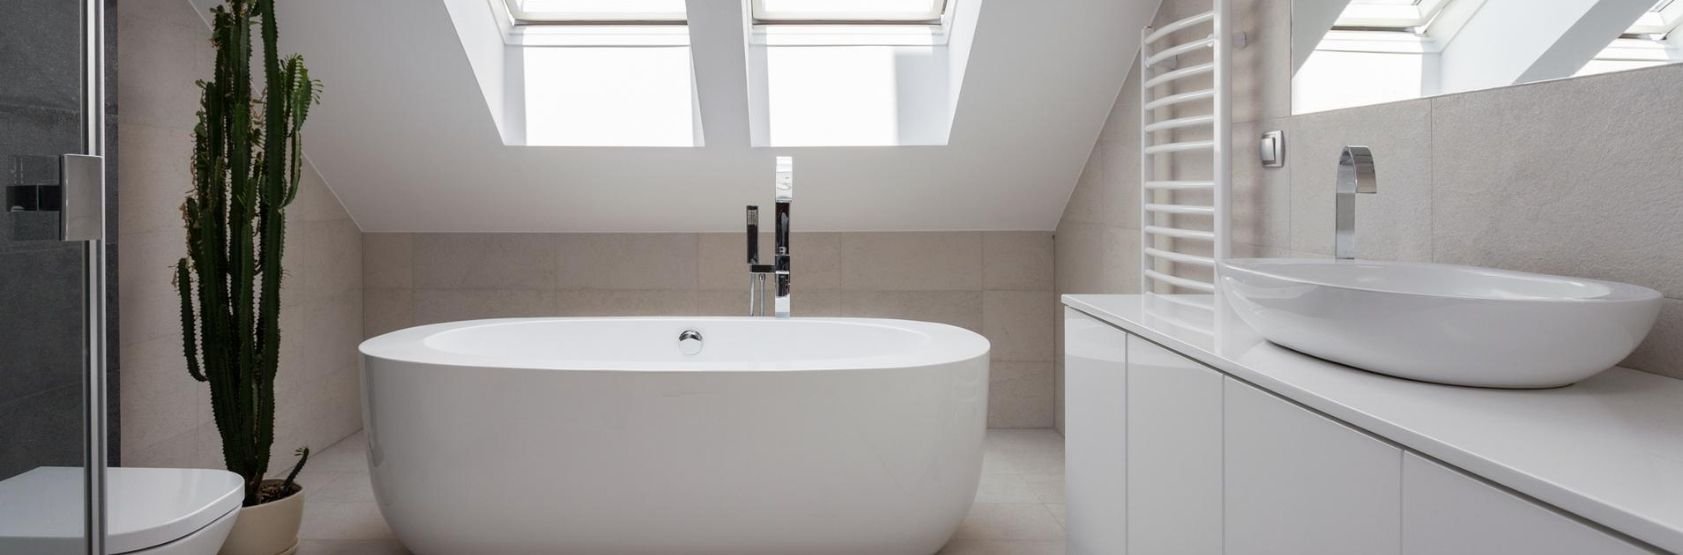 Bathroom-Fitting-Services-Dorset-Hampshire_14